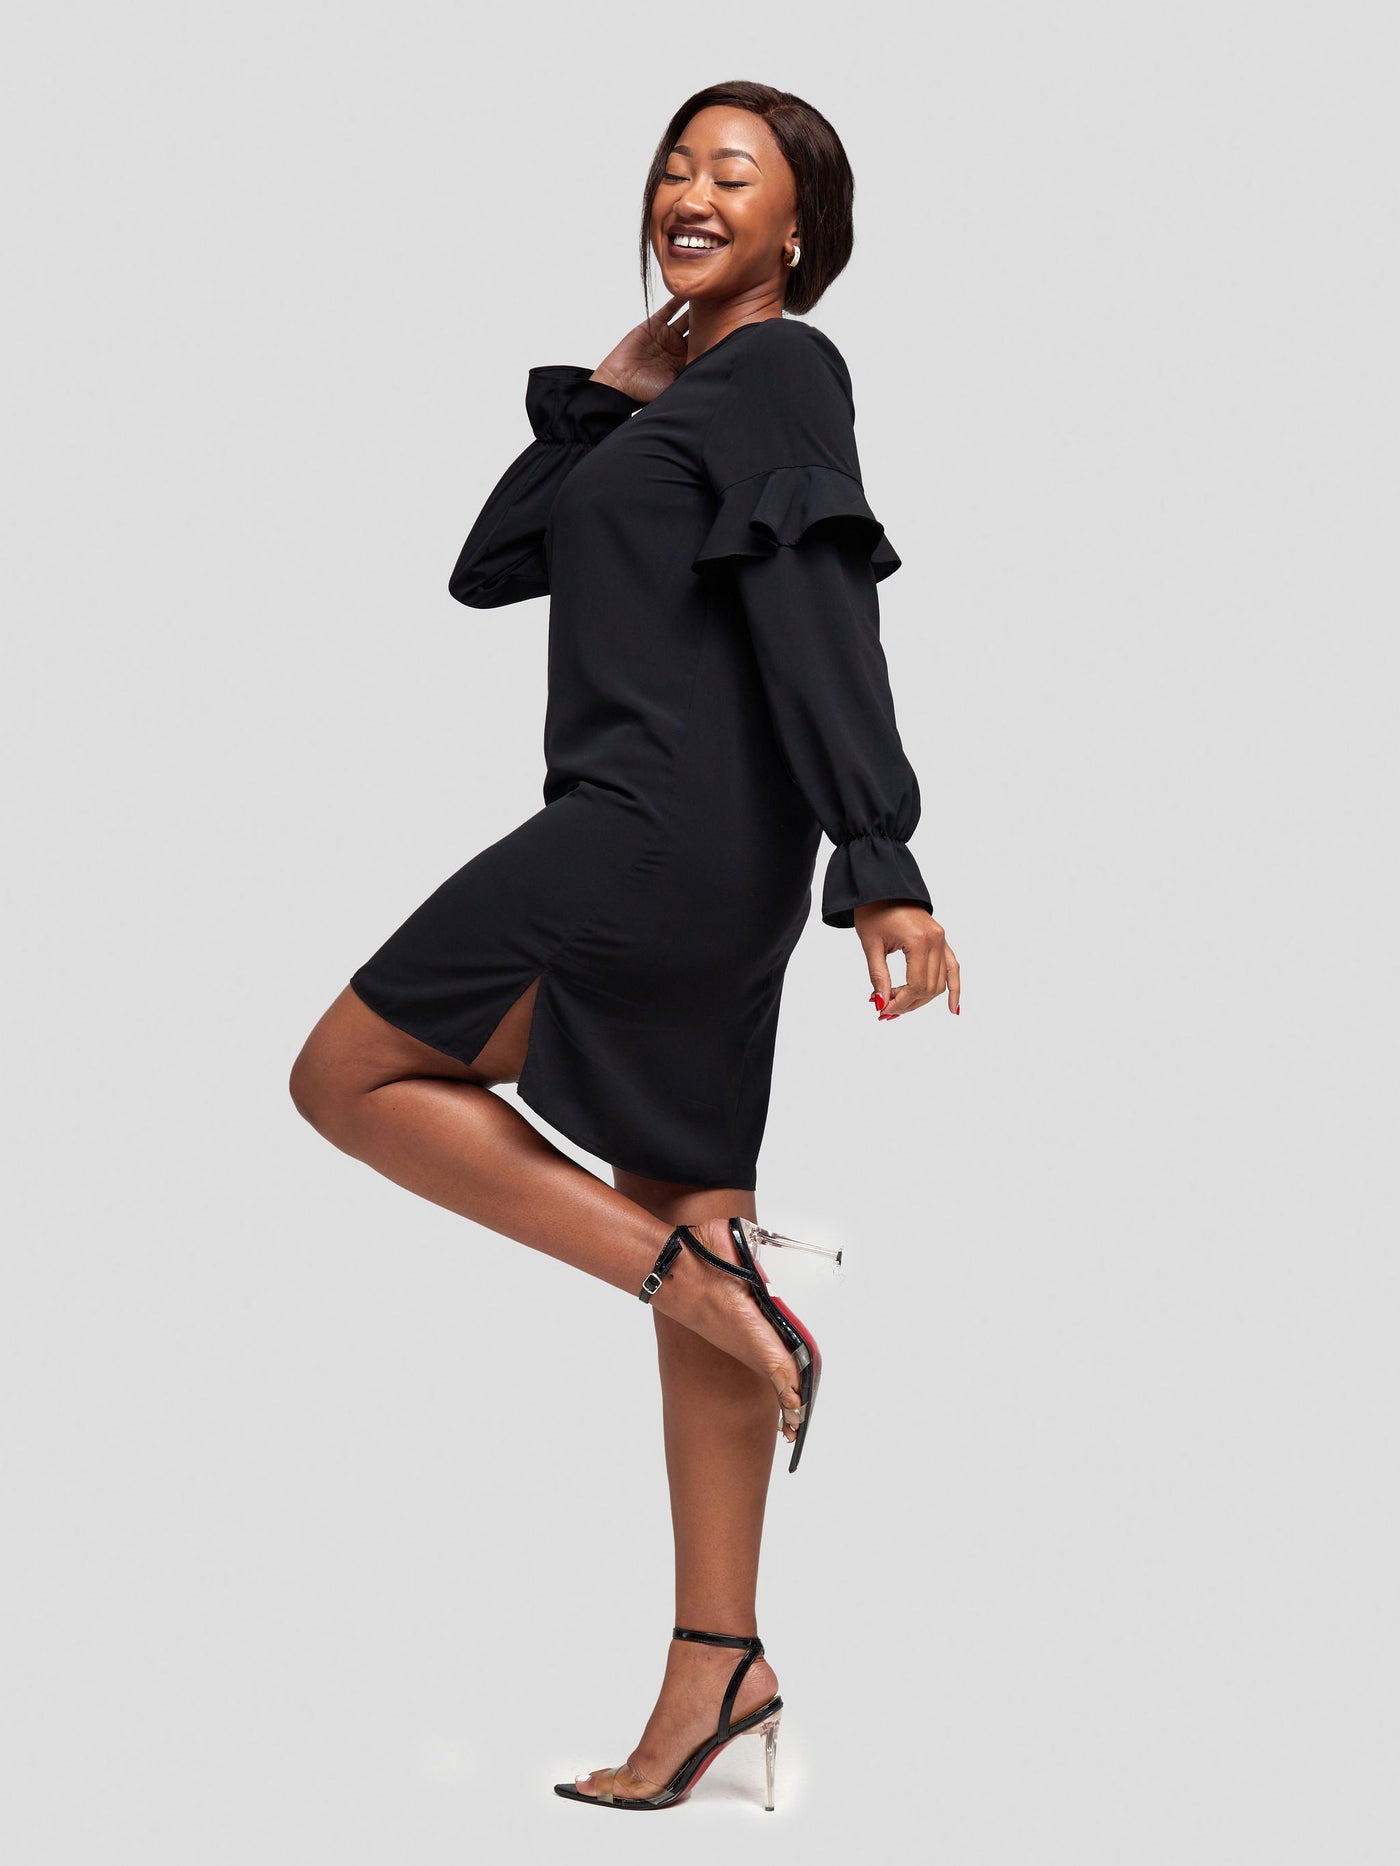 Vivo Ziwa Ruffle Long Sleeve Shift Dress (Petite) -  Black